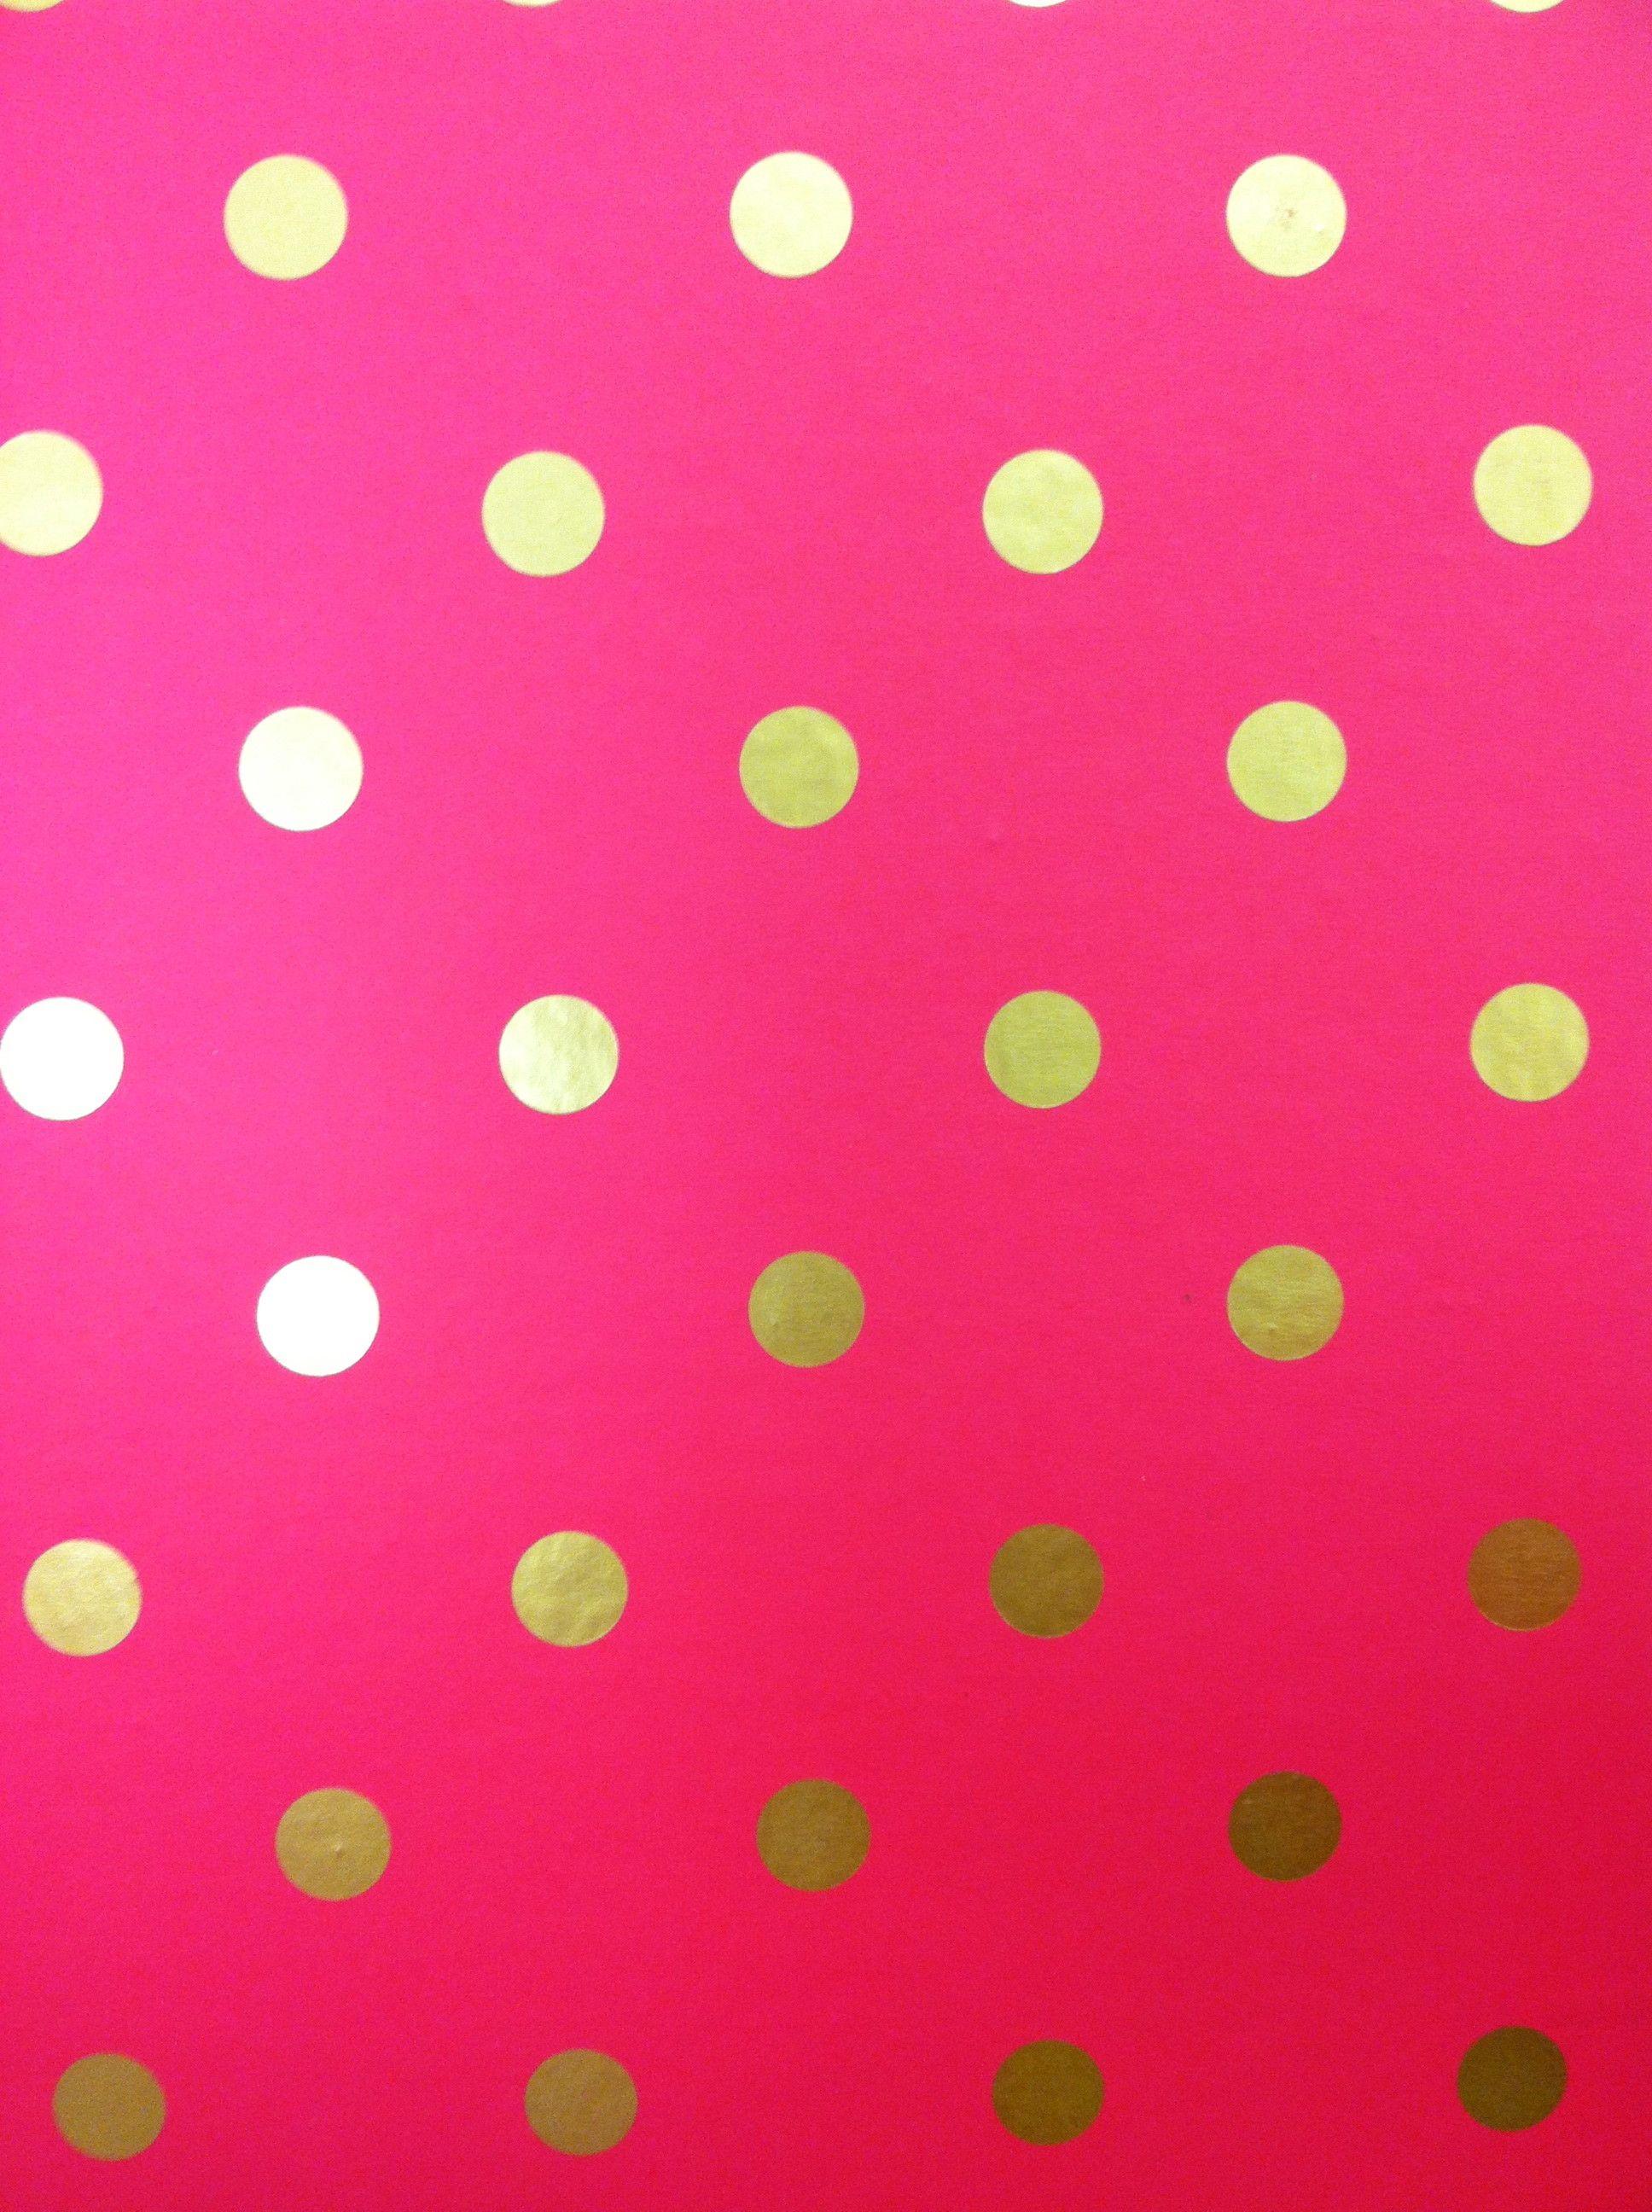 Gold Polka Dot Wallpapers - Top Free Gold Polka Dot Backgrounds ...